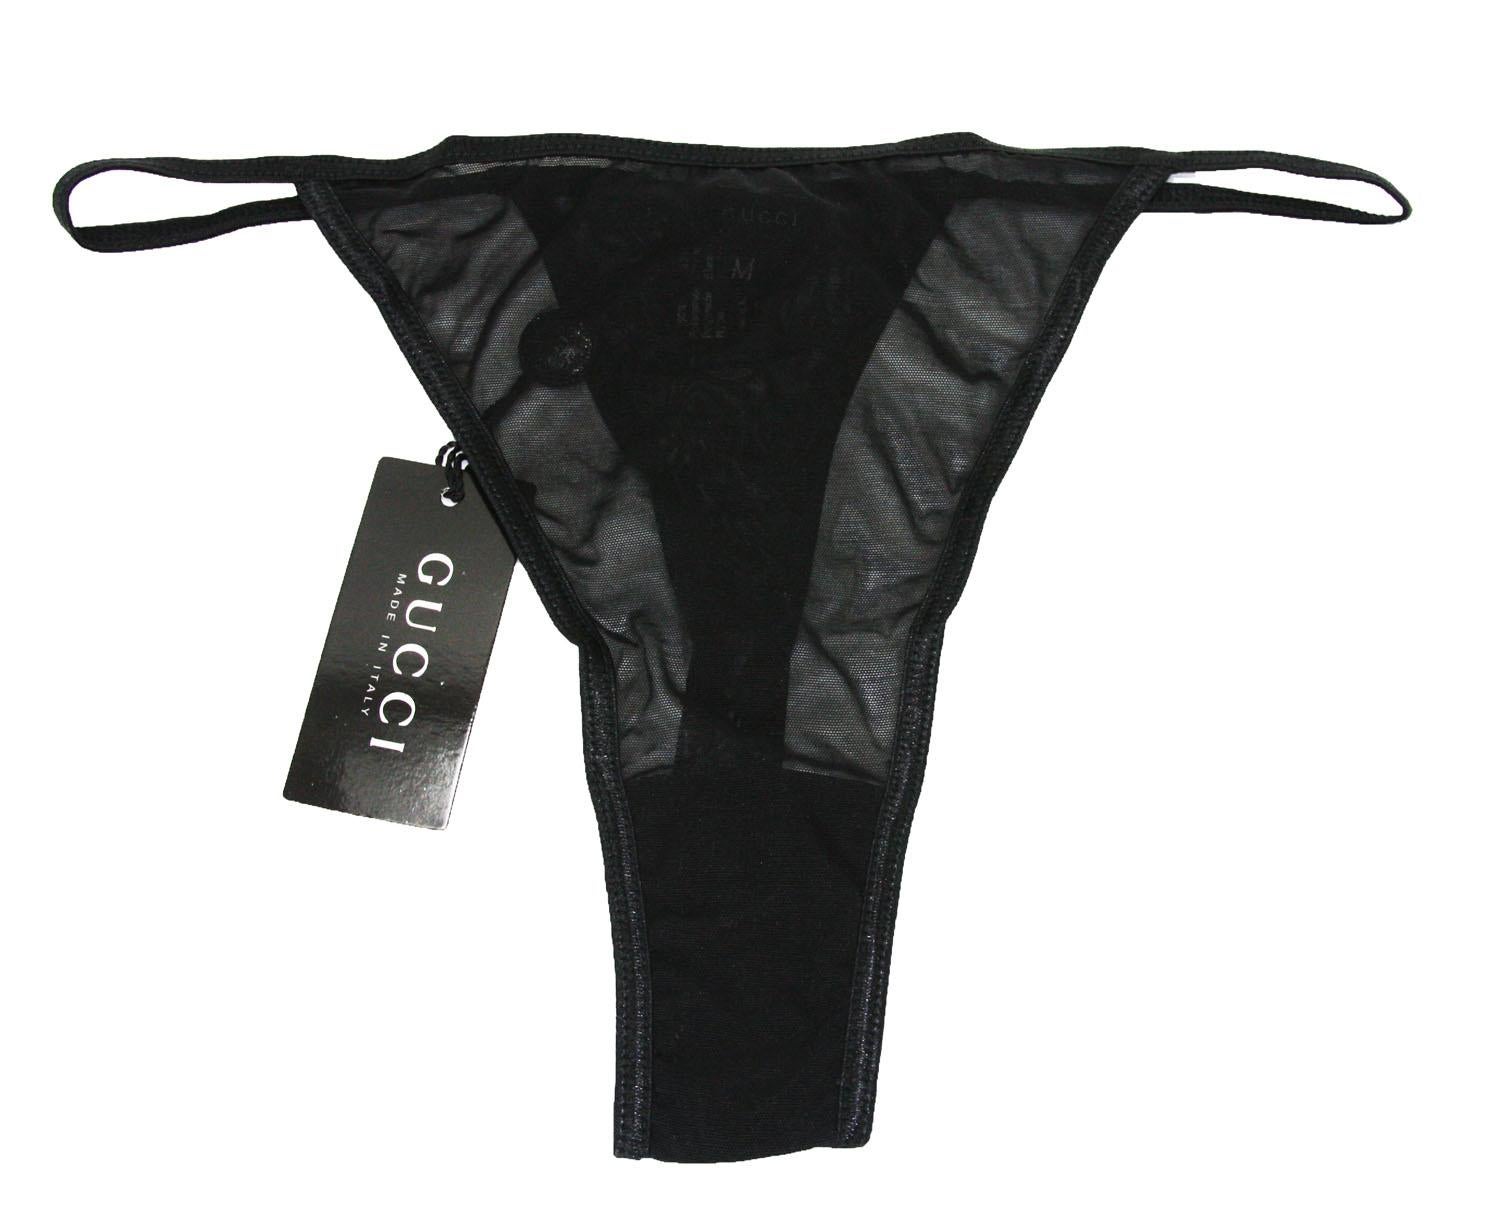 Tom Ford for Gucci Runway Black Sheer Cut-Out Top Bustier Velvet Details It.38 For Sale 4